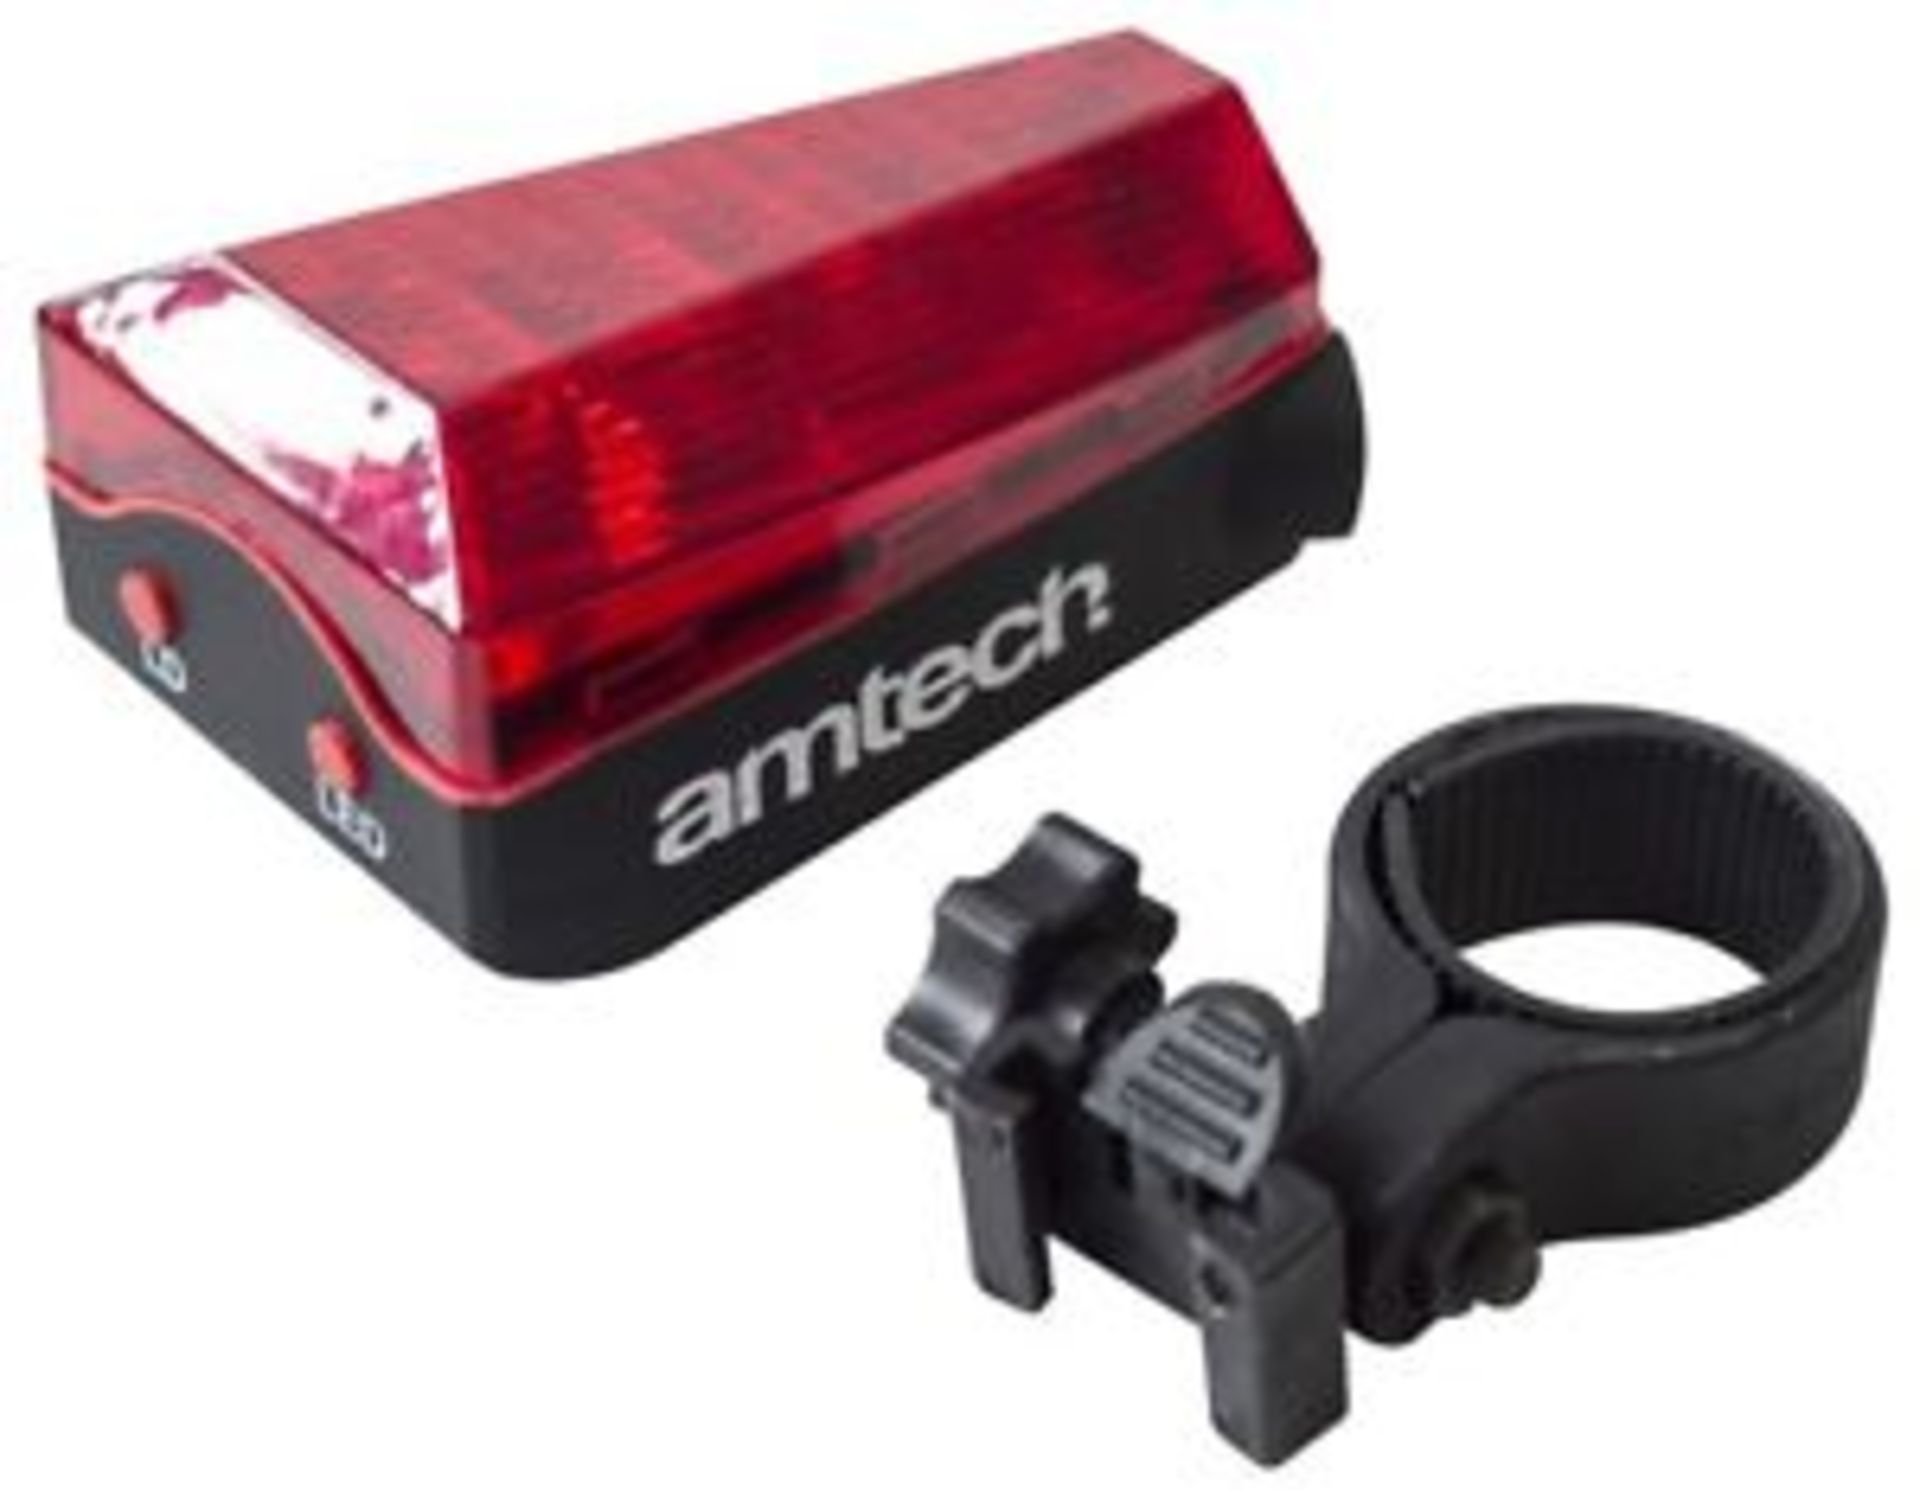 V Brand New Laser Tail LED Bike Light Includes 2xAA Batteries